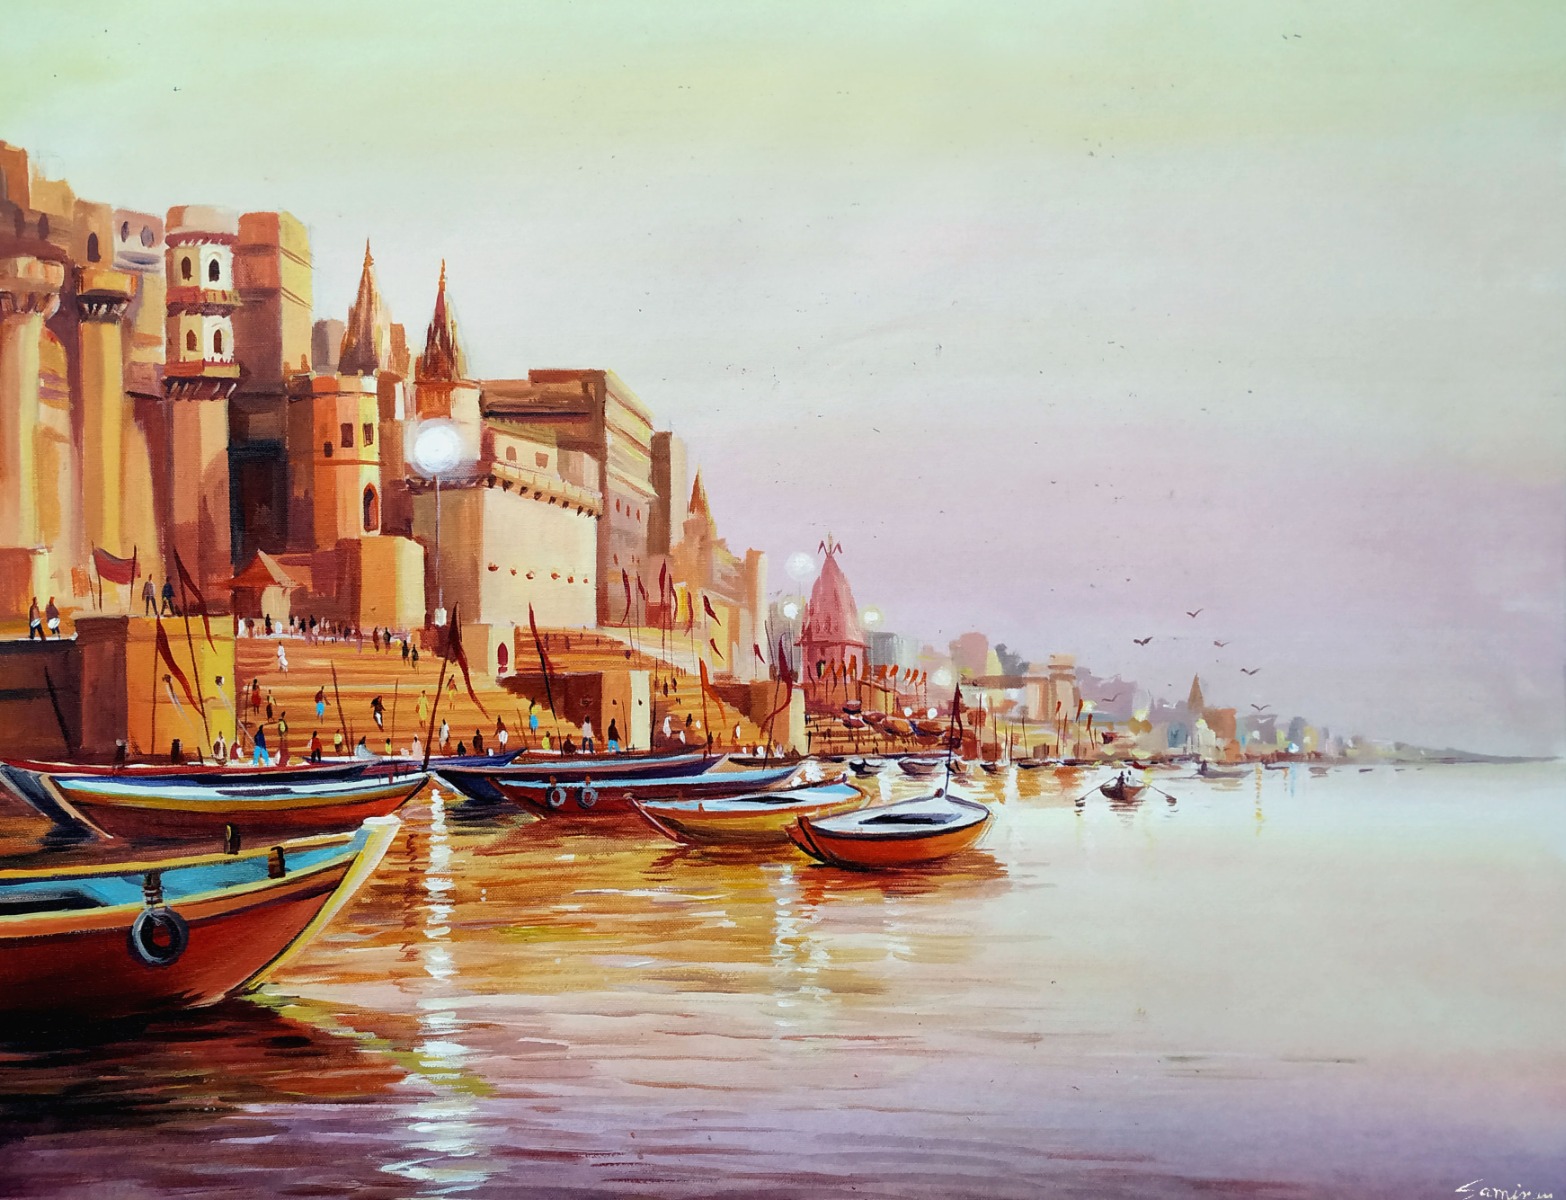 Subah Banaras Ghats & Boats